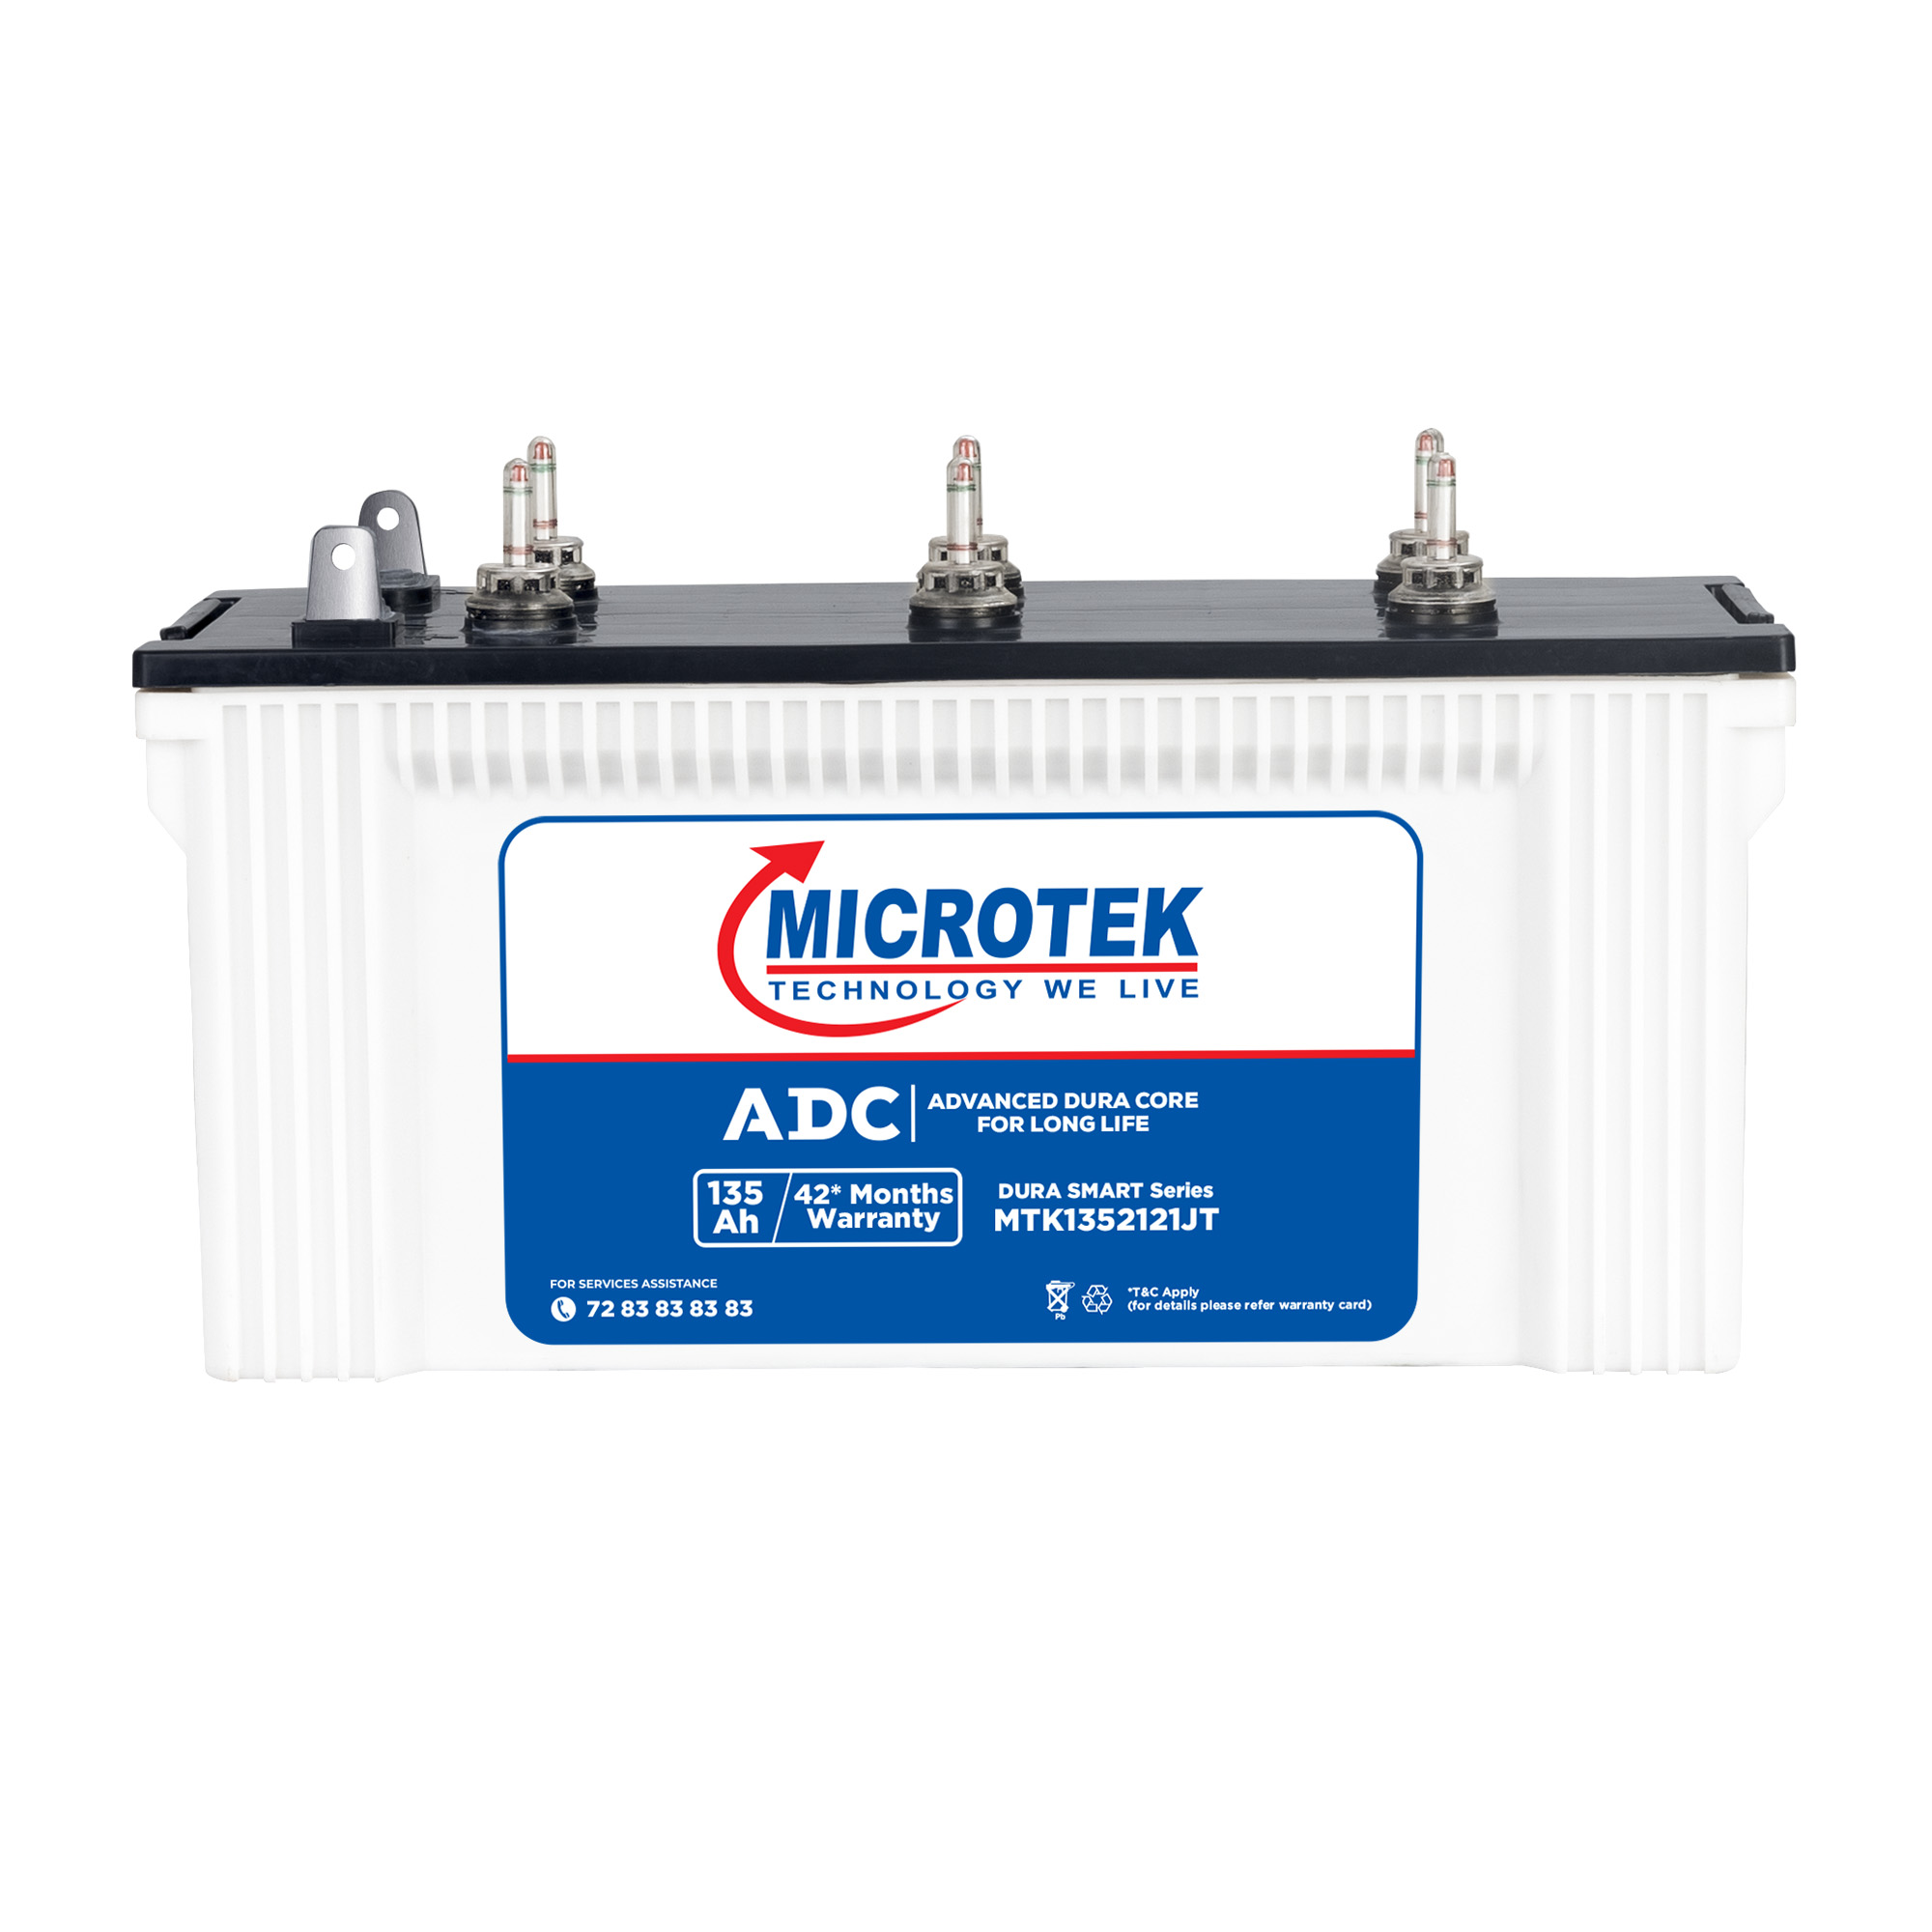 Microtek Dura Smart MTK1352121JT 135Ah/12V Inverter Battery With Advanced Dura Core Technology